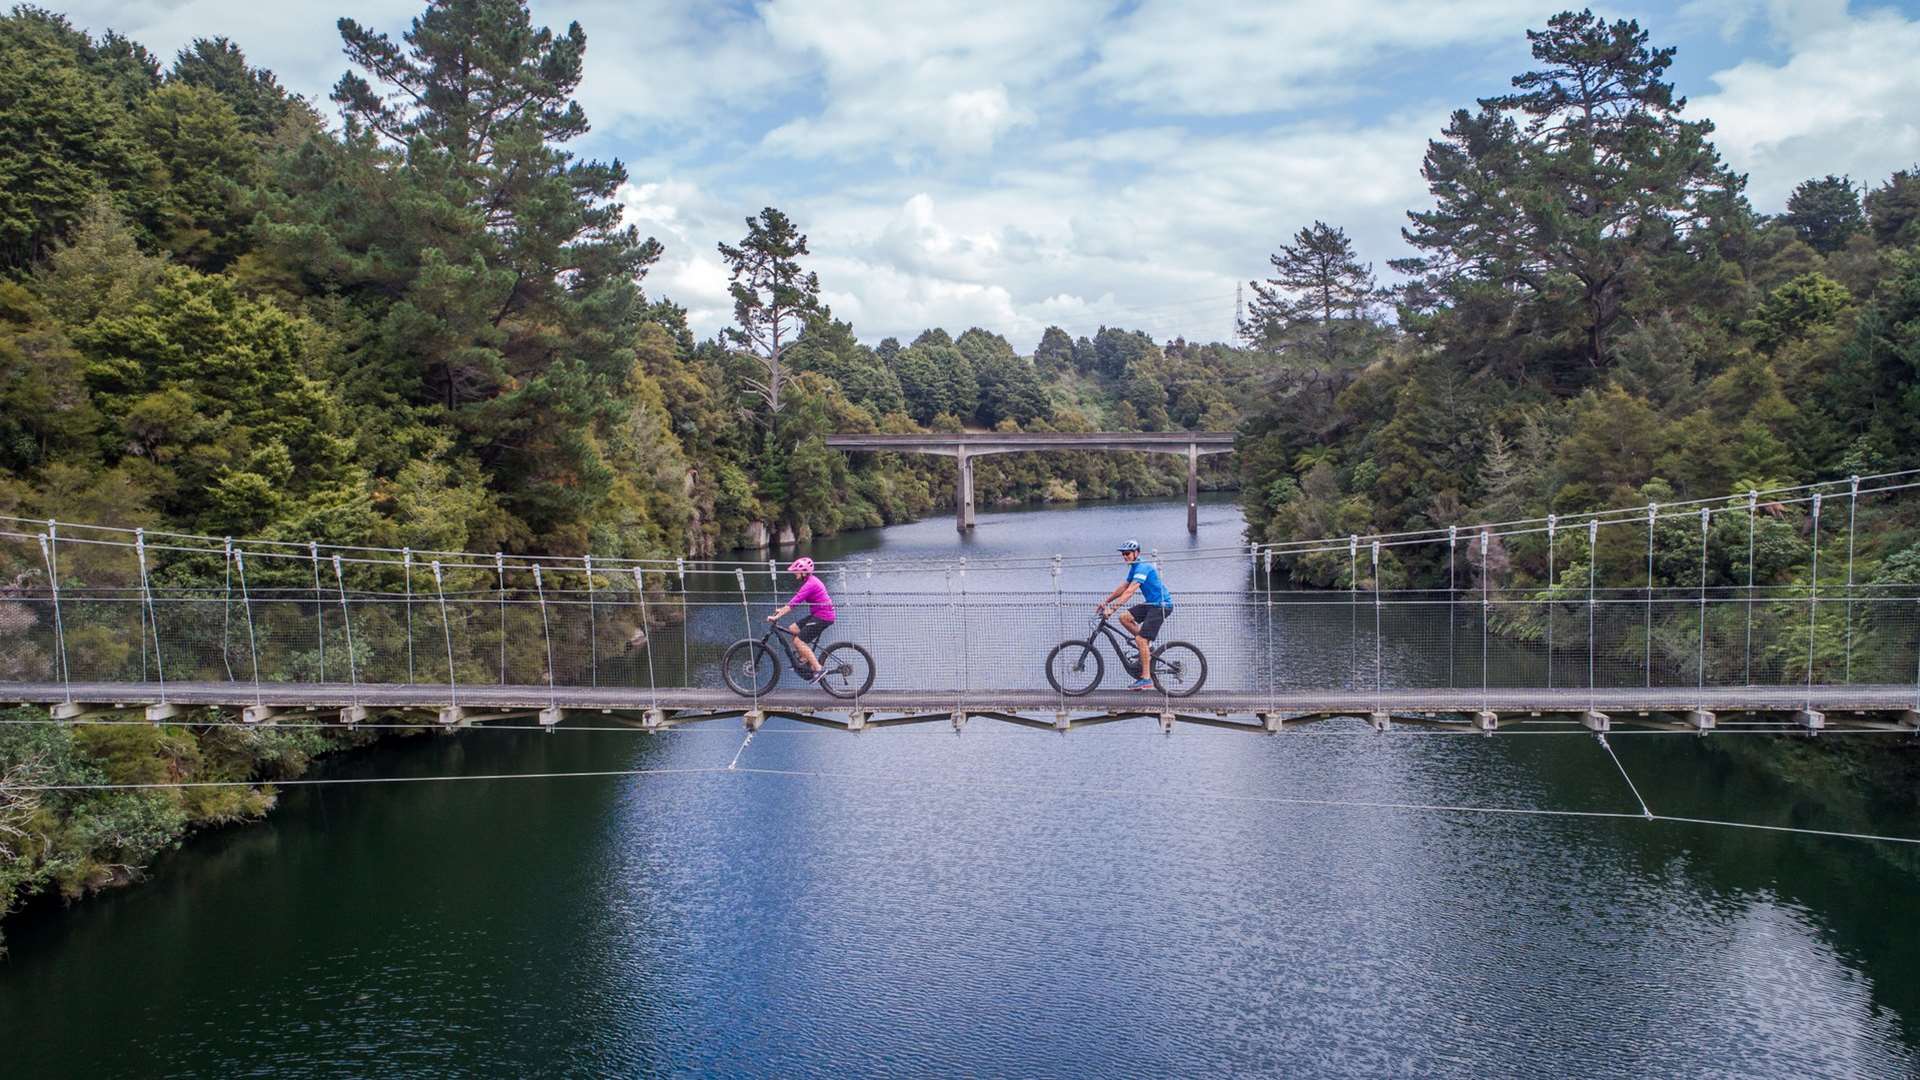 Waikato River Trails couple biking on a bridge - Waikato River